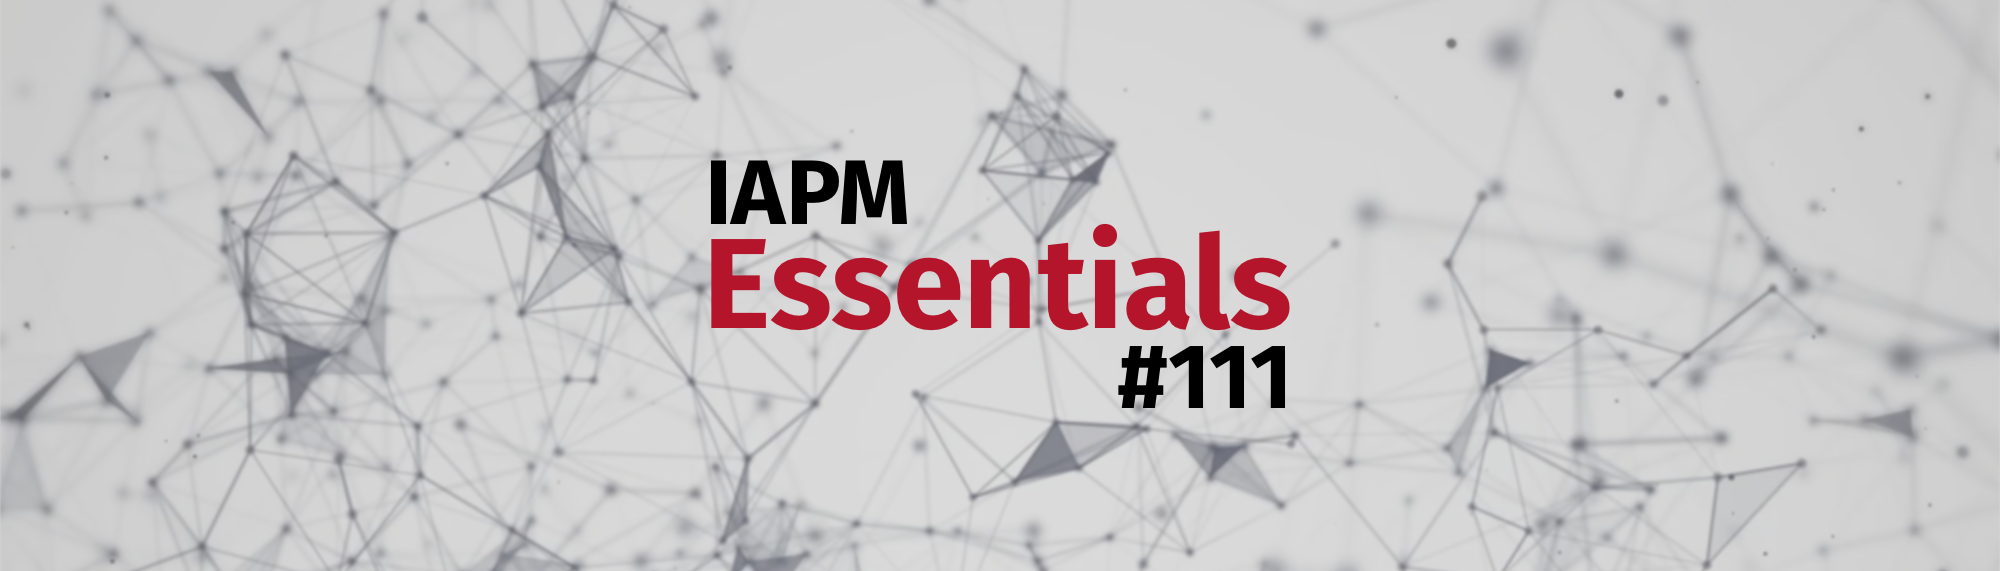 IAPM Essentials #111 - PM Neuigkeiten | IAPM